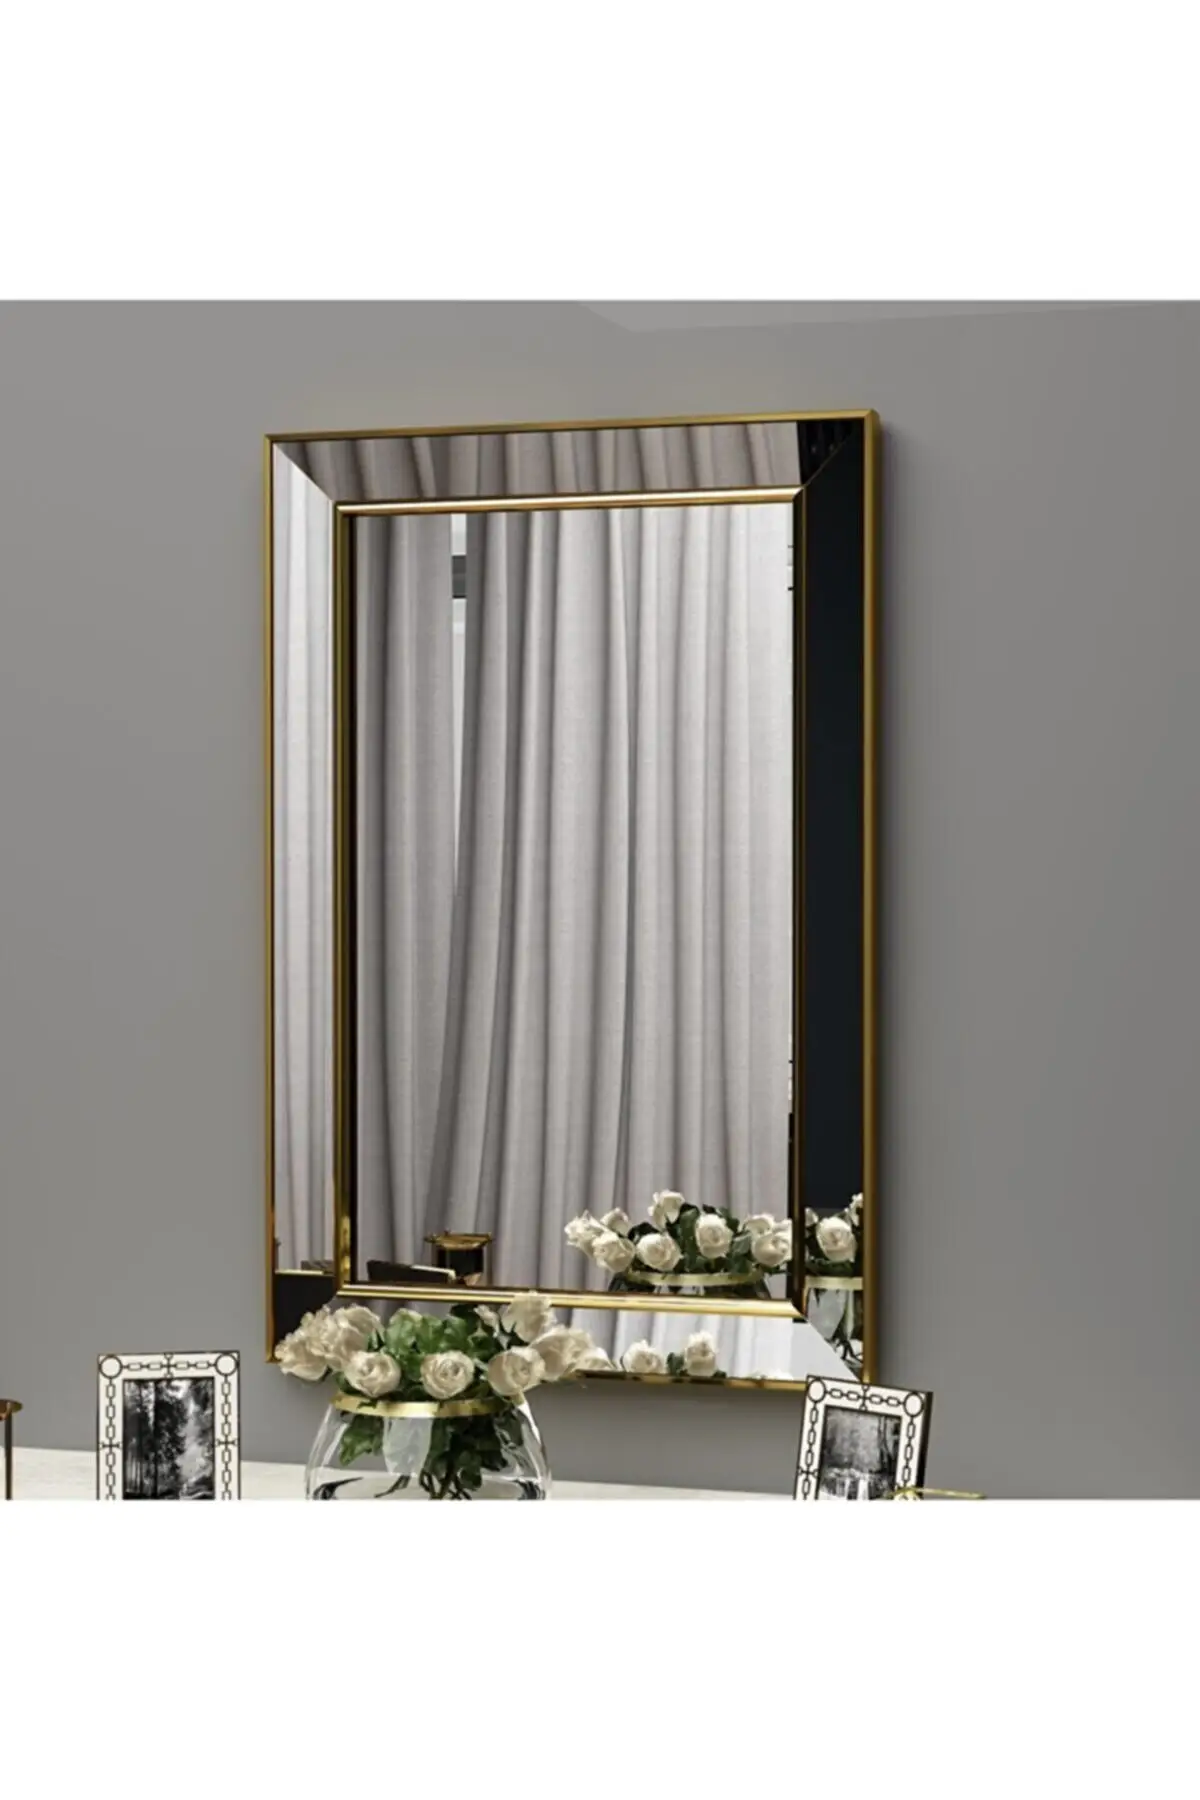 

Single Mirror Framed Decorative Salon Office Wall Mirror 50x75 Gold Wall Mirror Black Round Decorative Mirrors